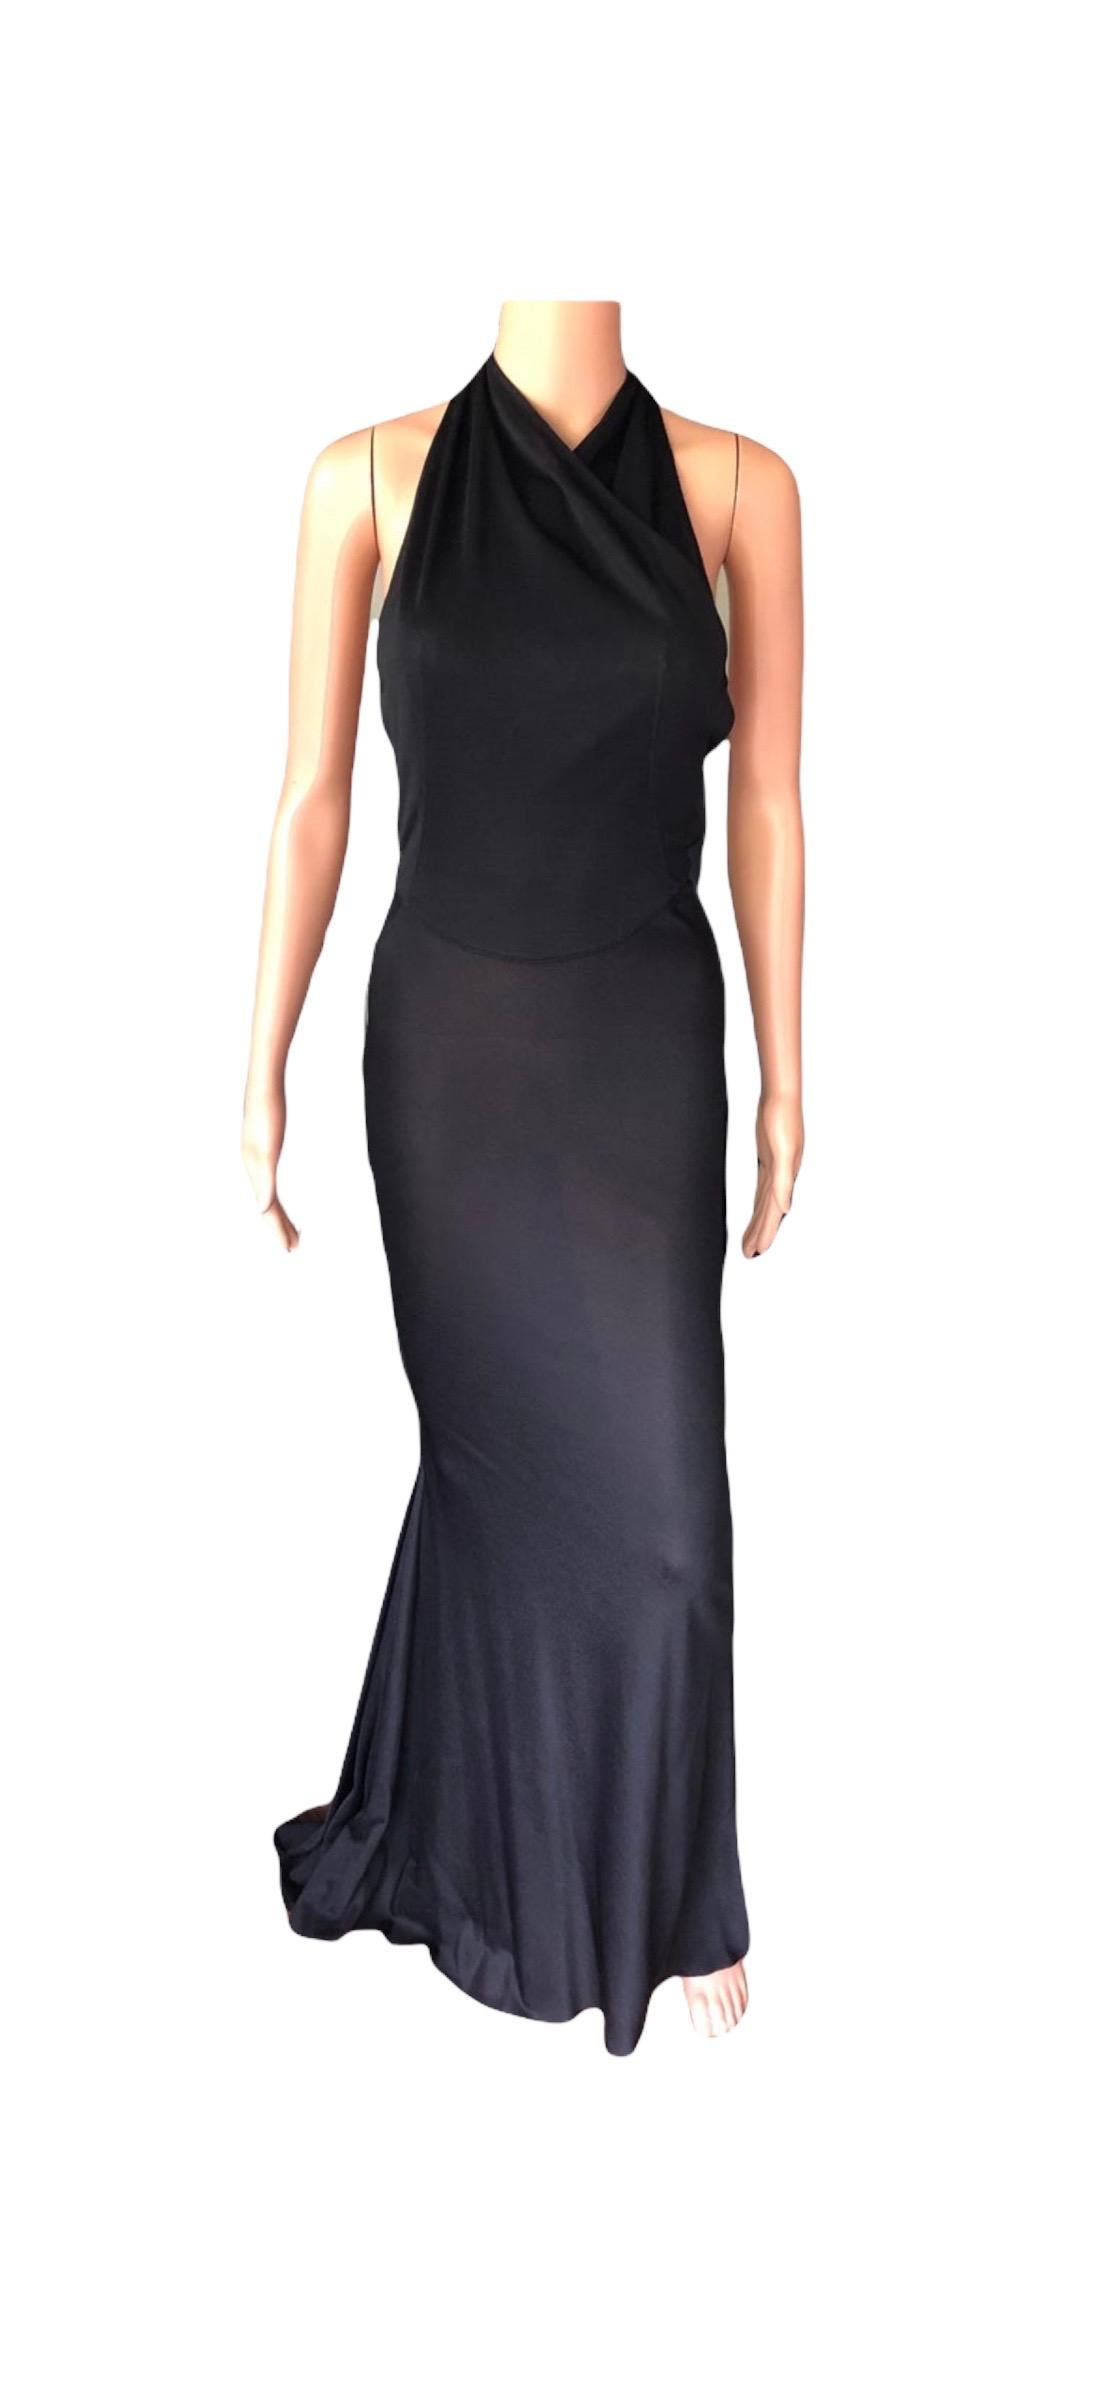 Azzedine Alaïa F/W 2001 Vintage Halter Backless Black Gown Maxi Dress For Sale 5